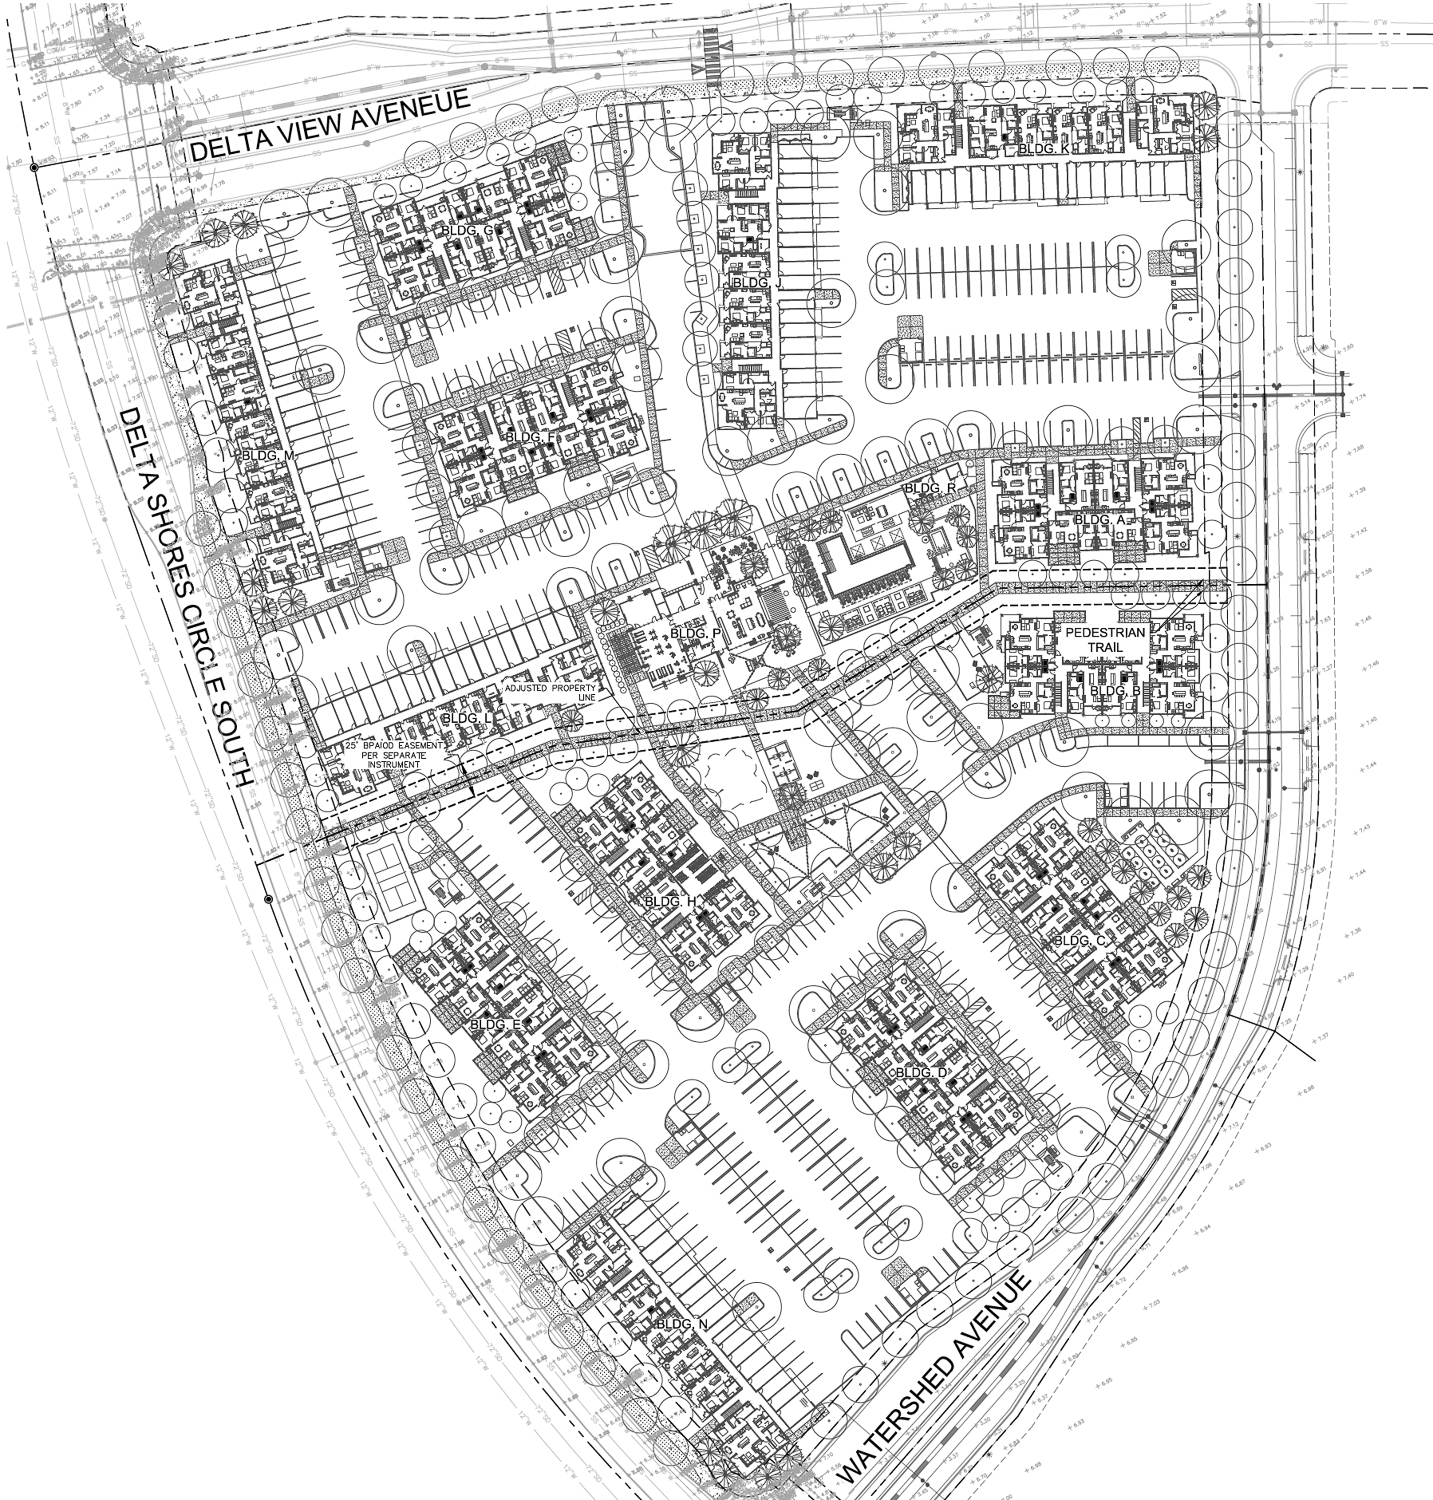 8203 Delta Shores Circle site plan, illustration by Dahlin Group